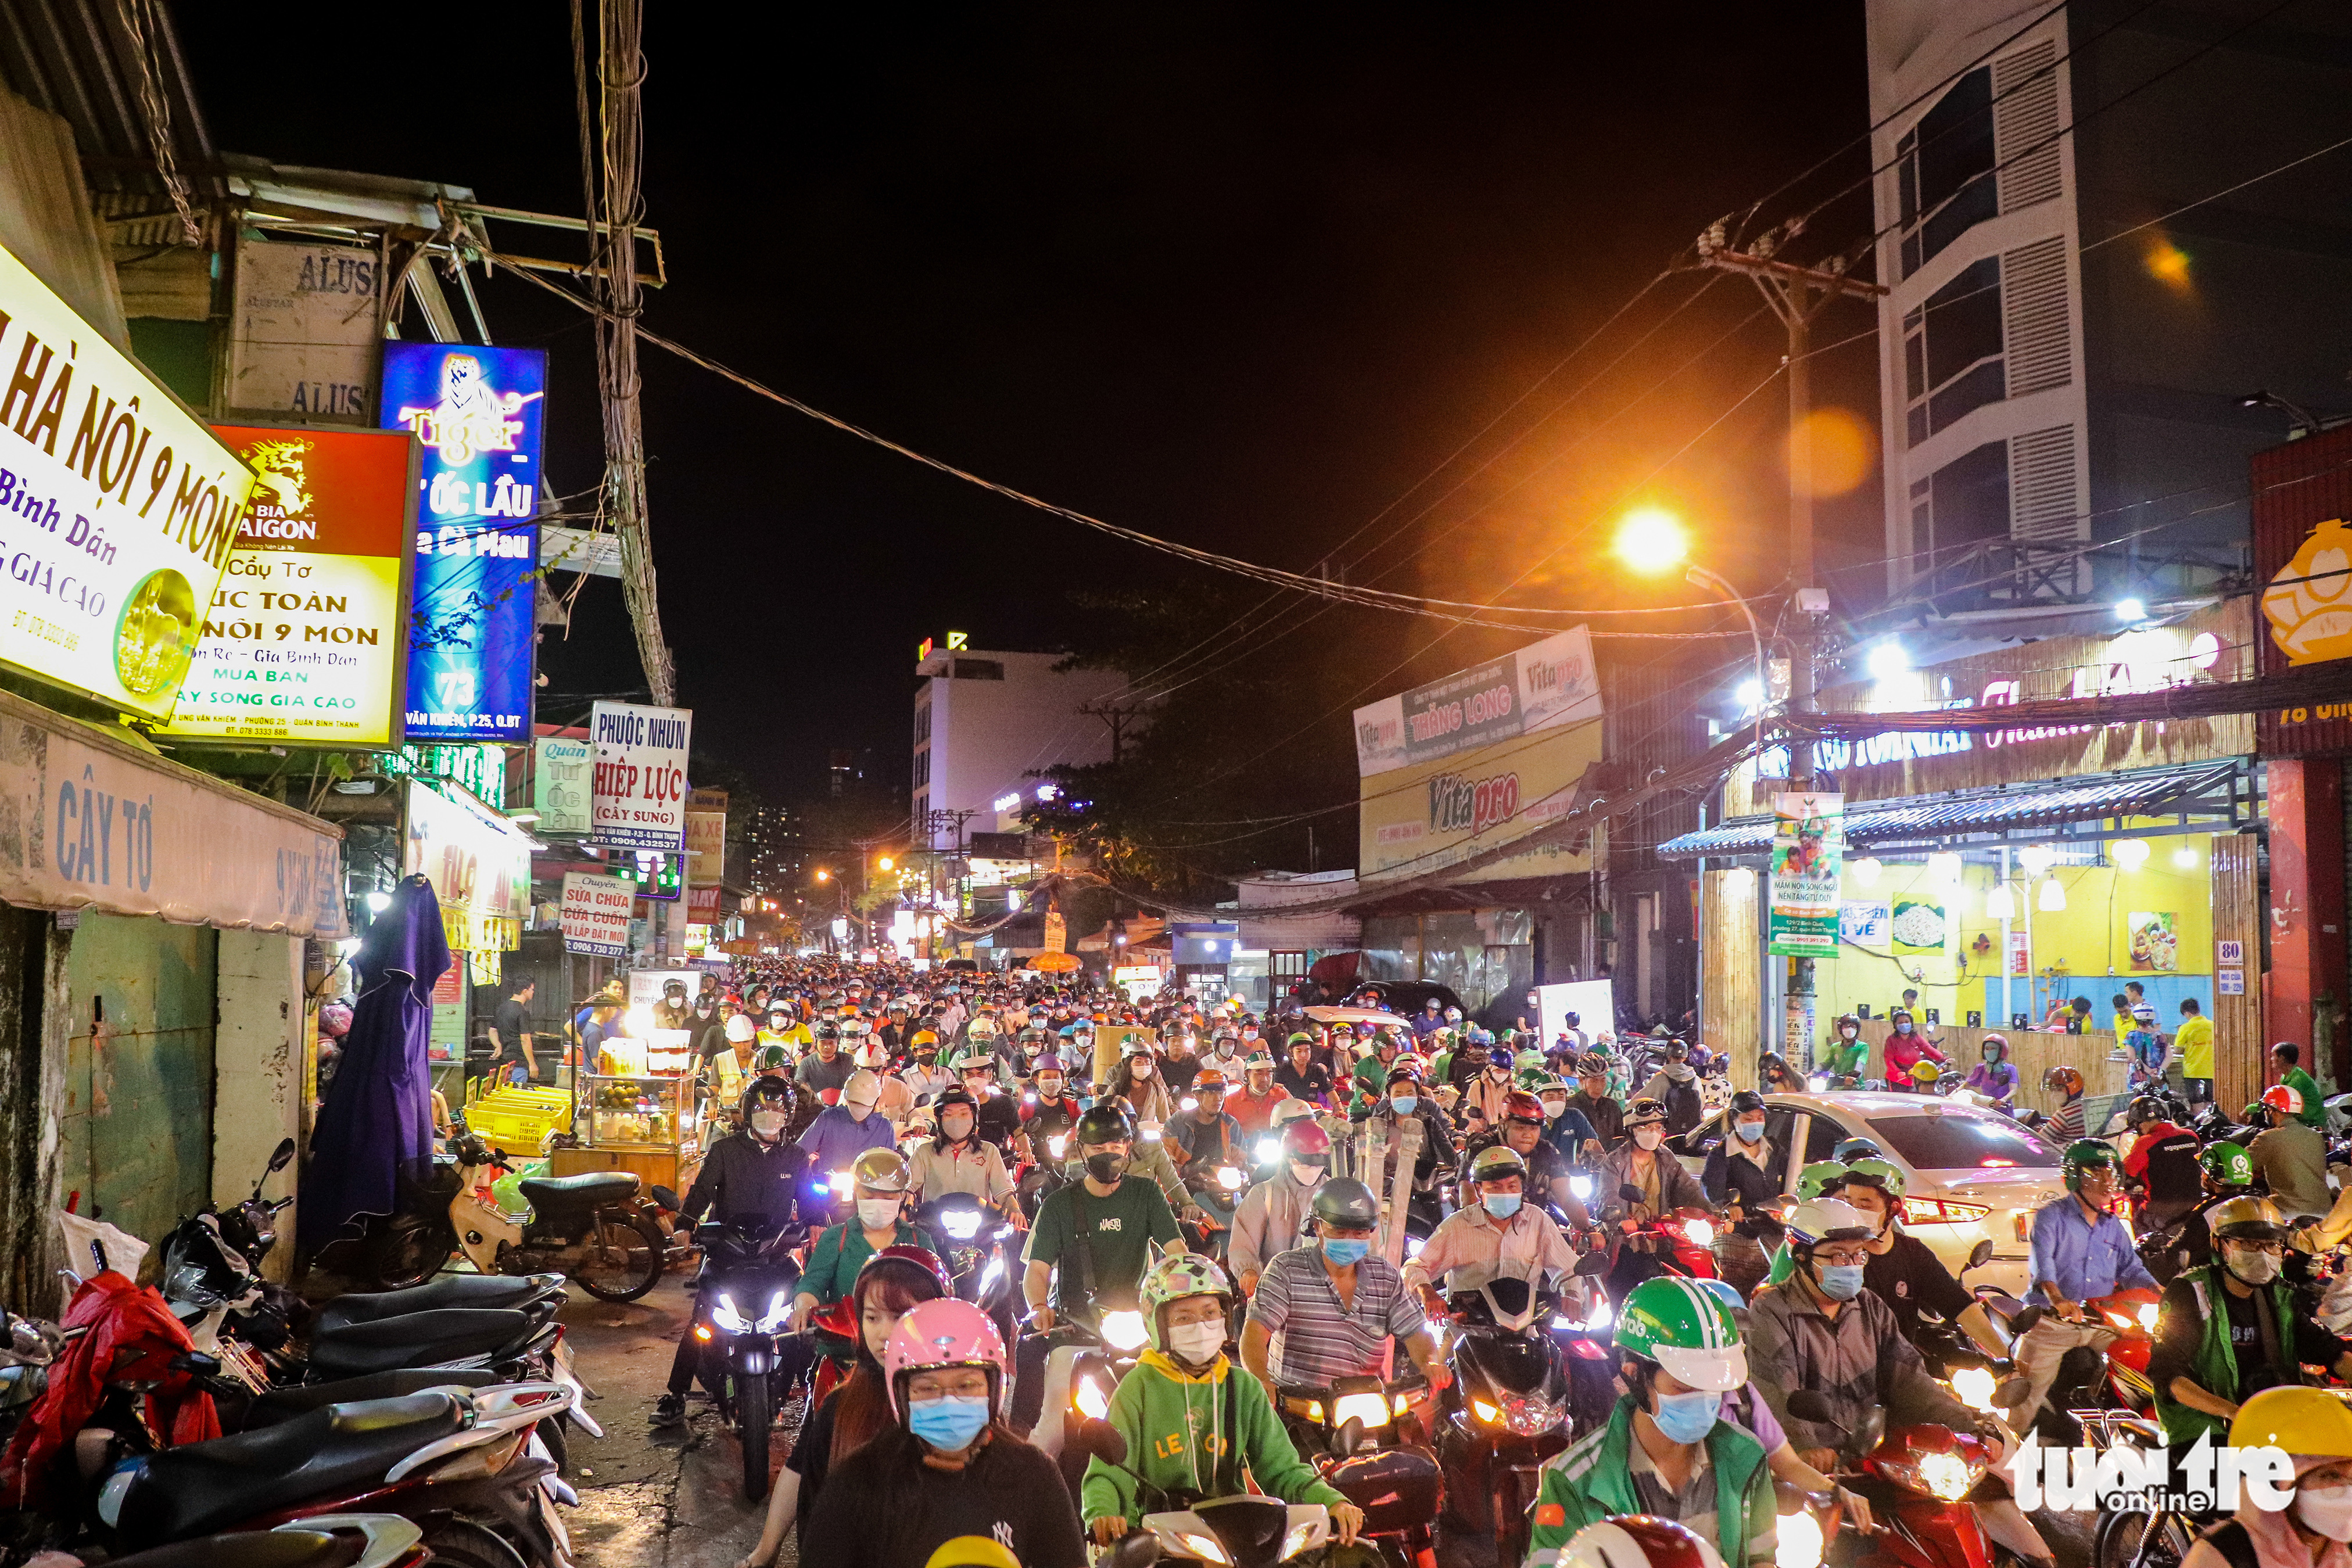 Vehicles fill Ung Van Khiem Street in Binh Thanh District, Ho Chi Minh City, November 25, 2022. Photo: Chau Tuan / Tuoi Tre